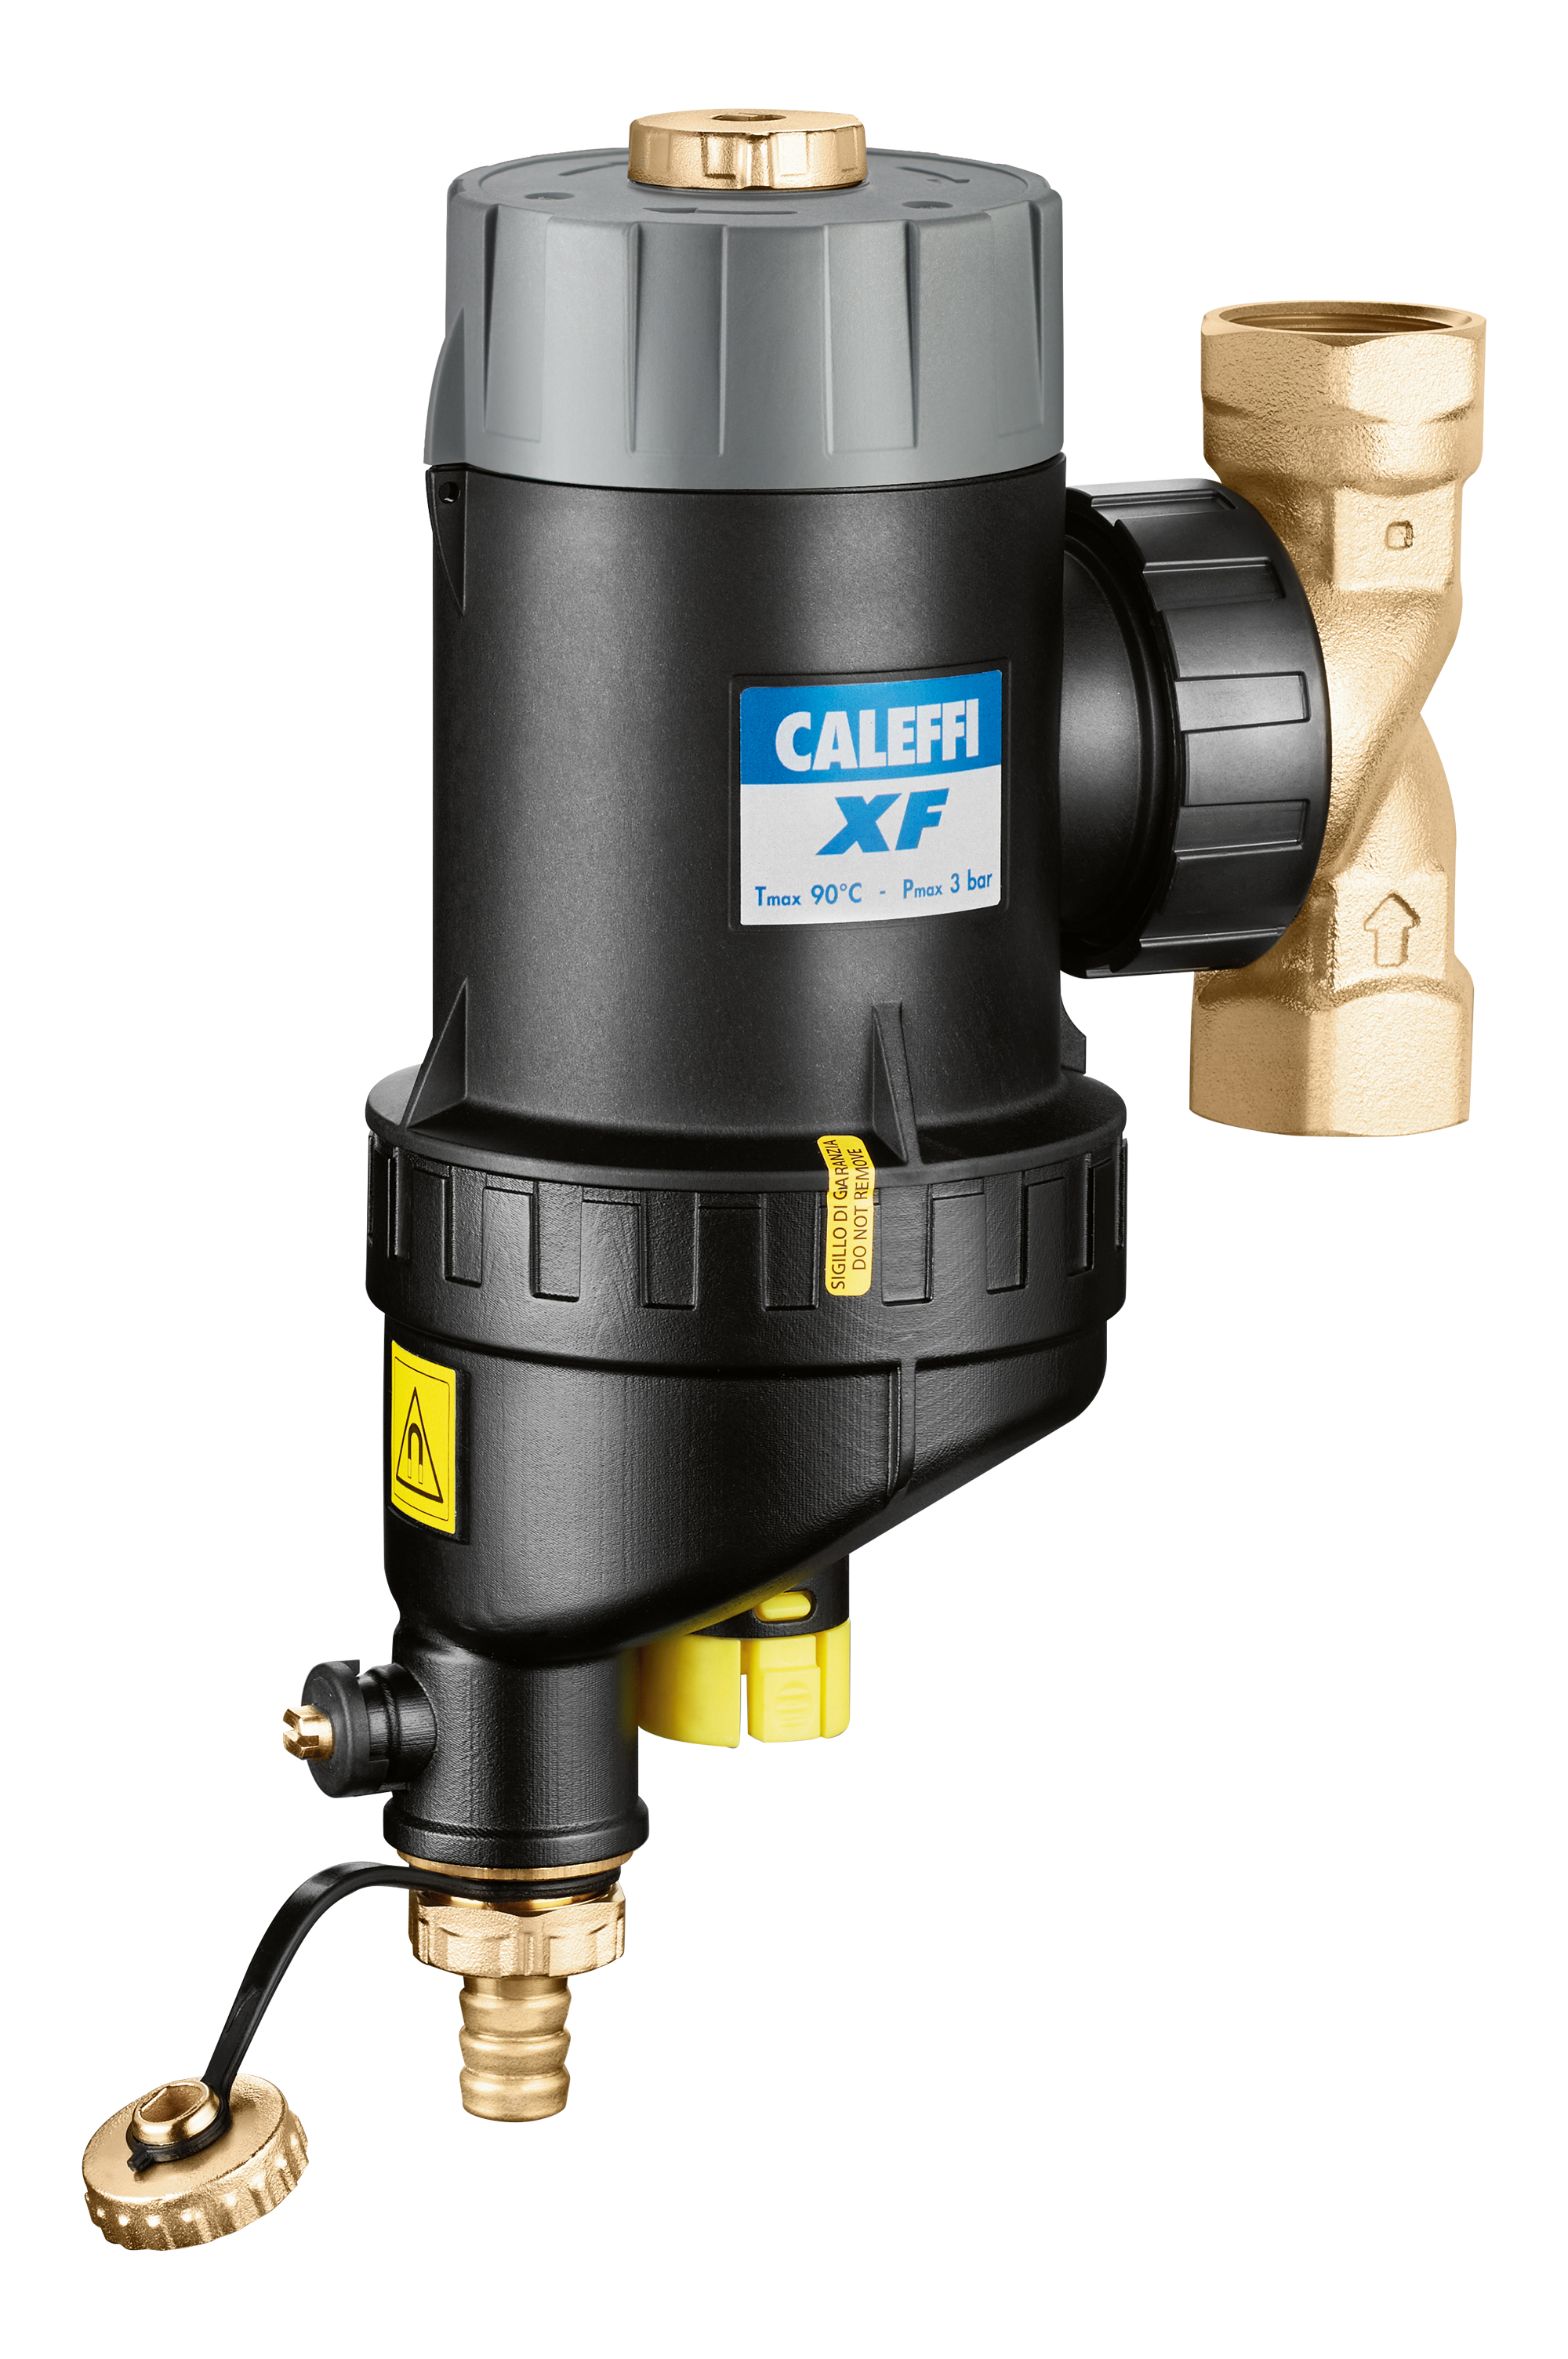 CALEFFI XF Semi-automatic self-cleaning magnetic filter (577 series) - Wärmepumpenanlage, Wasseraufbereitung, Caleffi S.p.A.